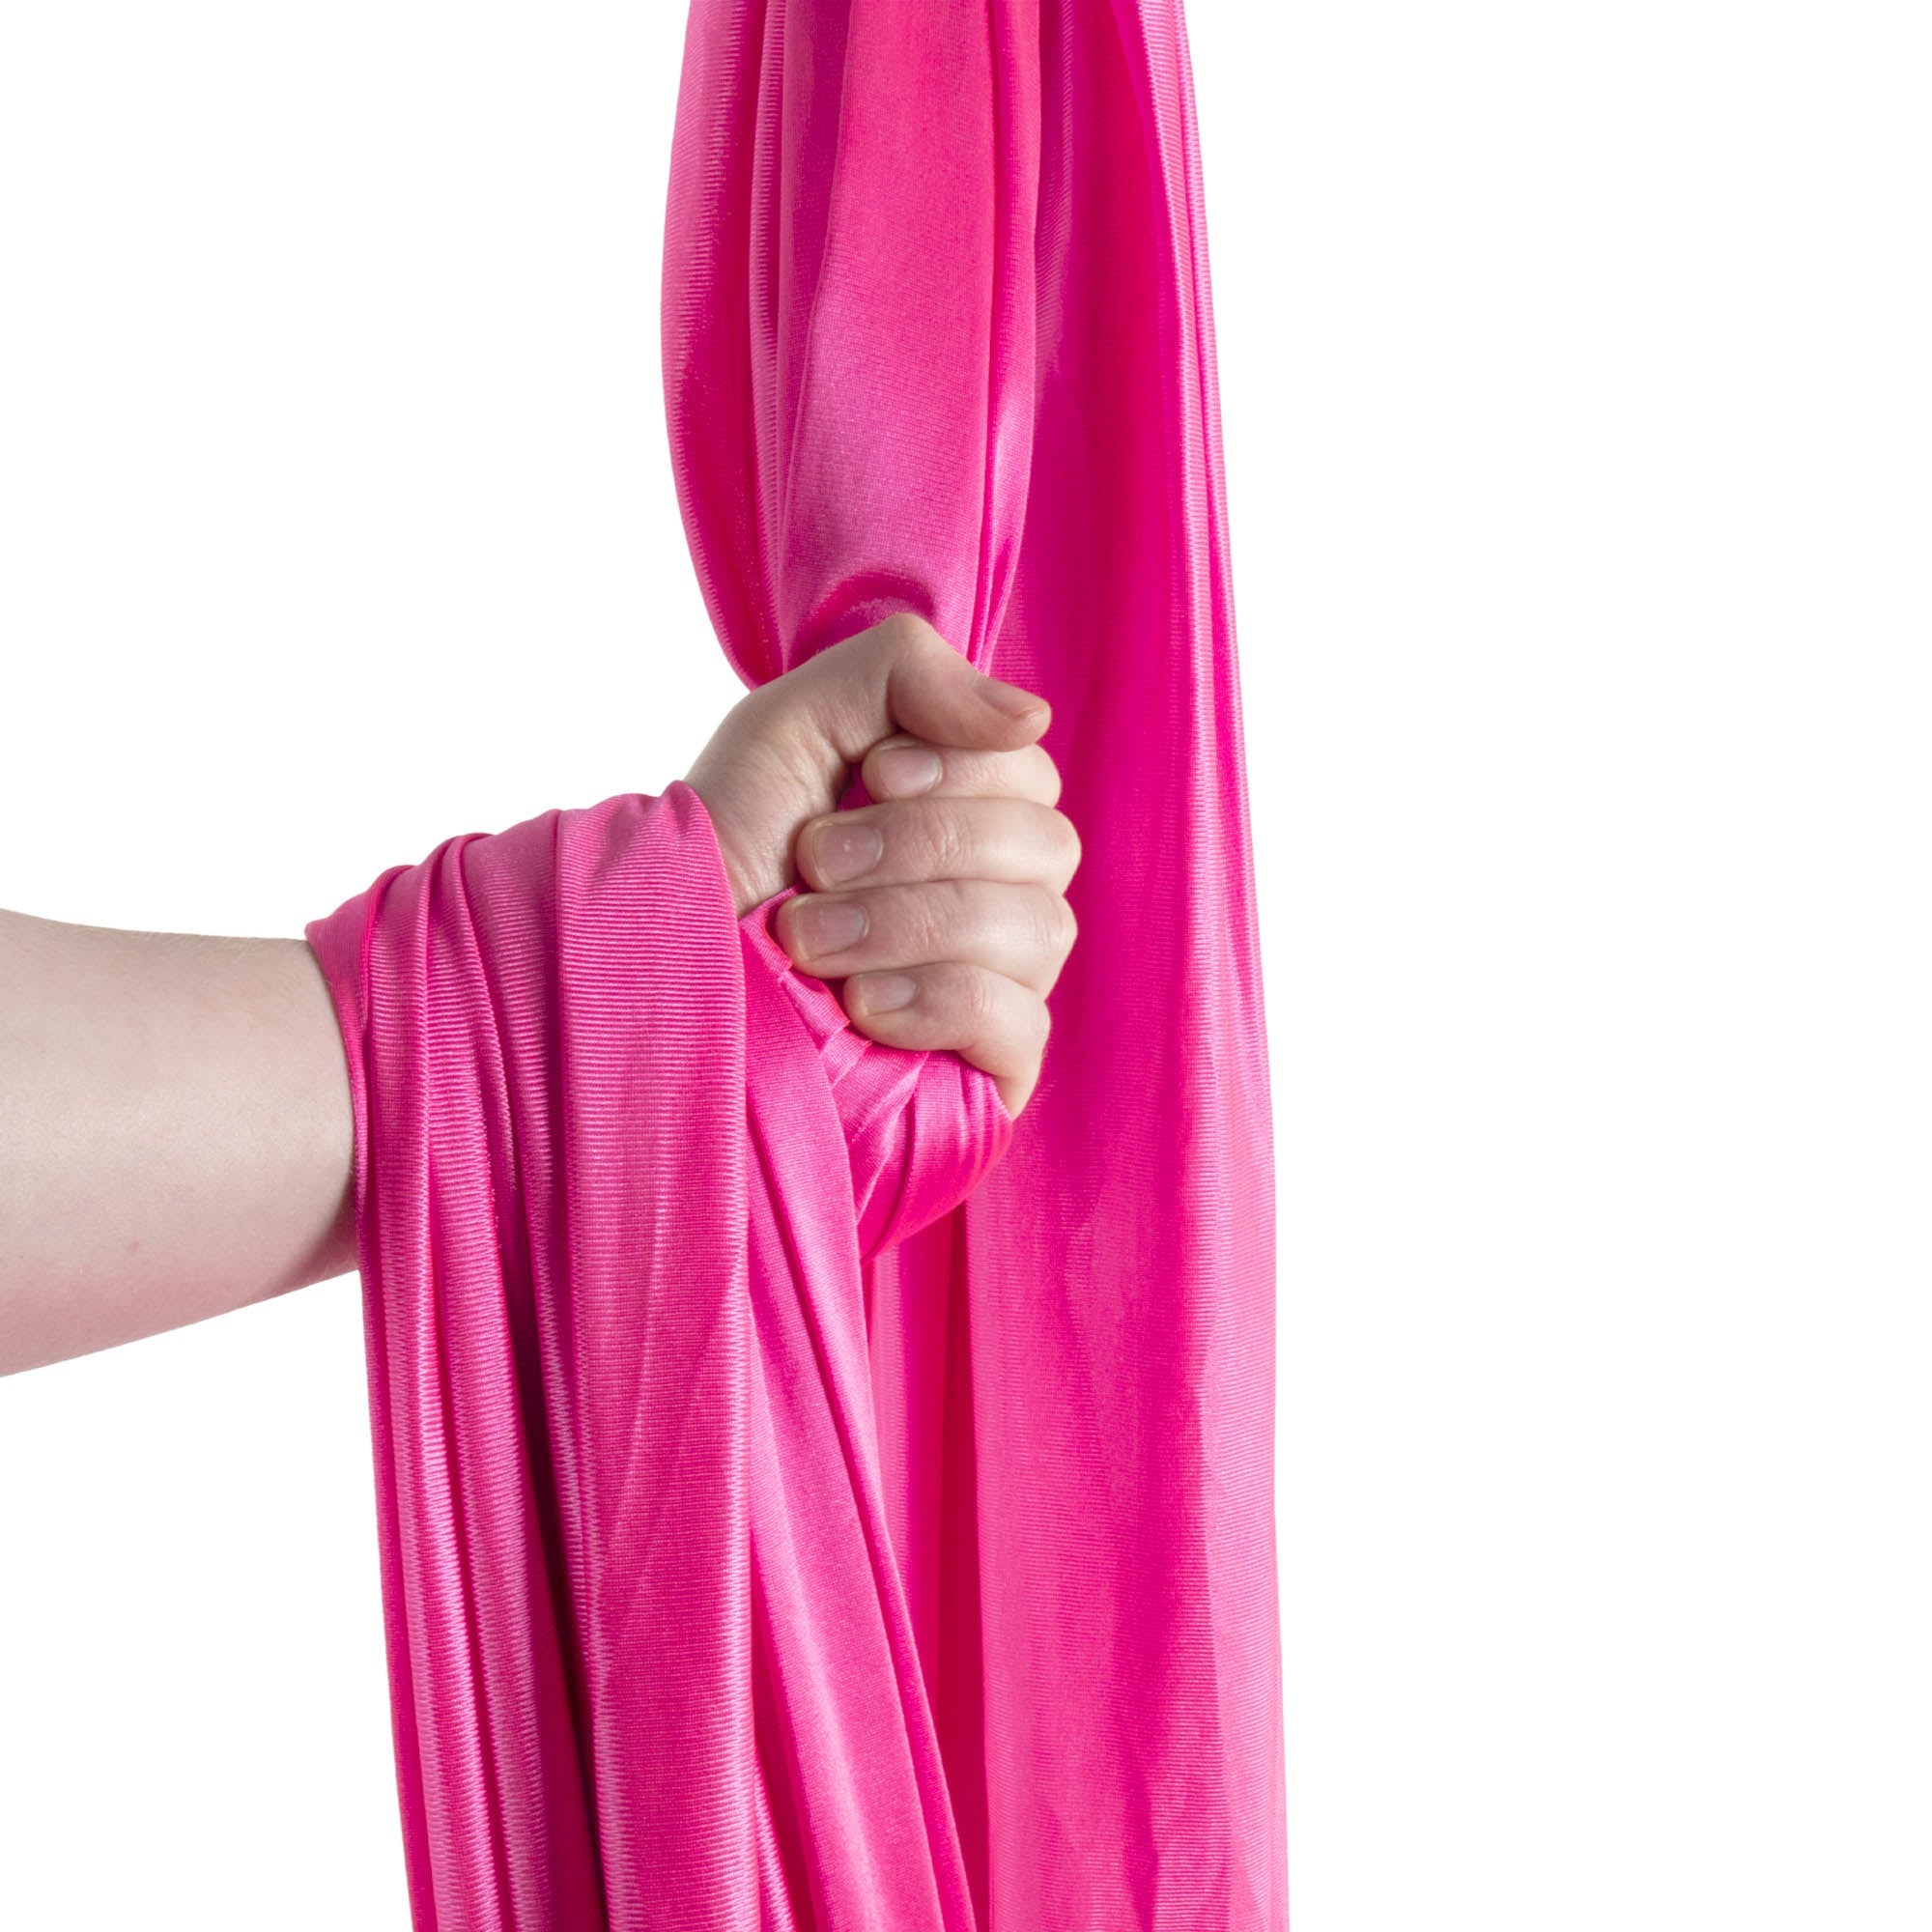 Pink yoga hammock wrapped around hand